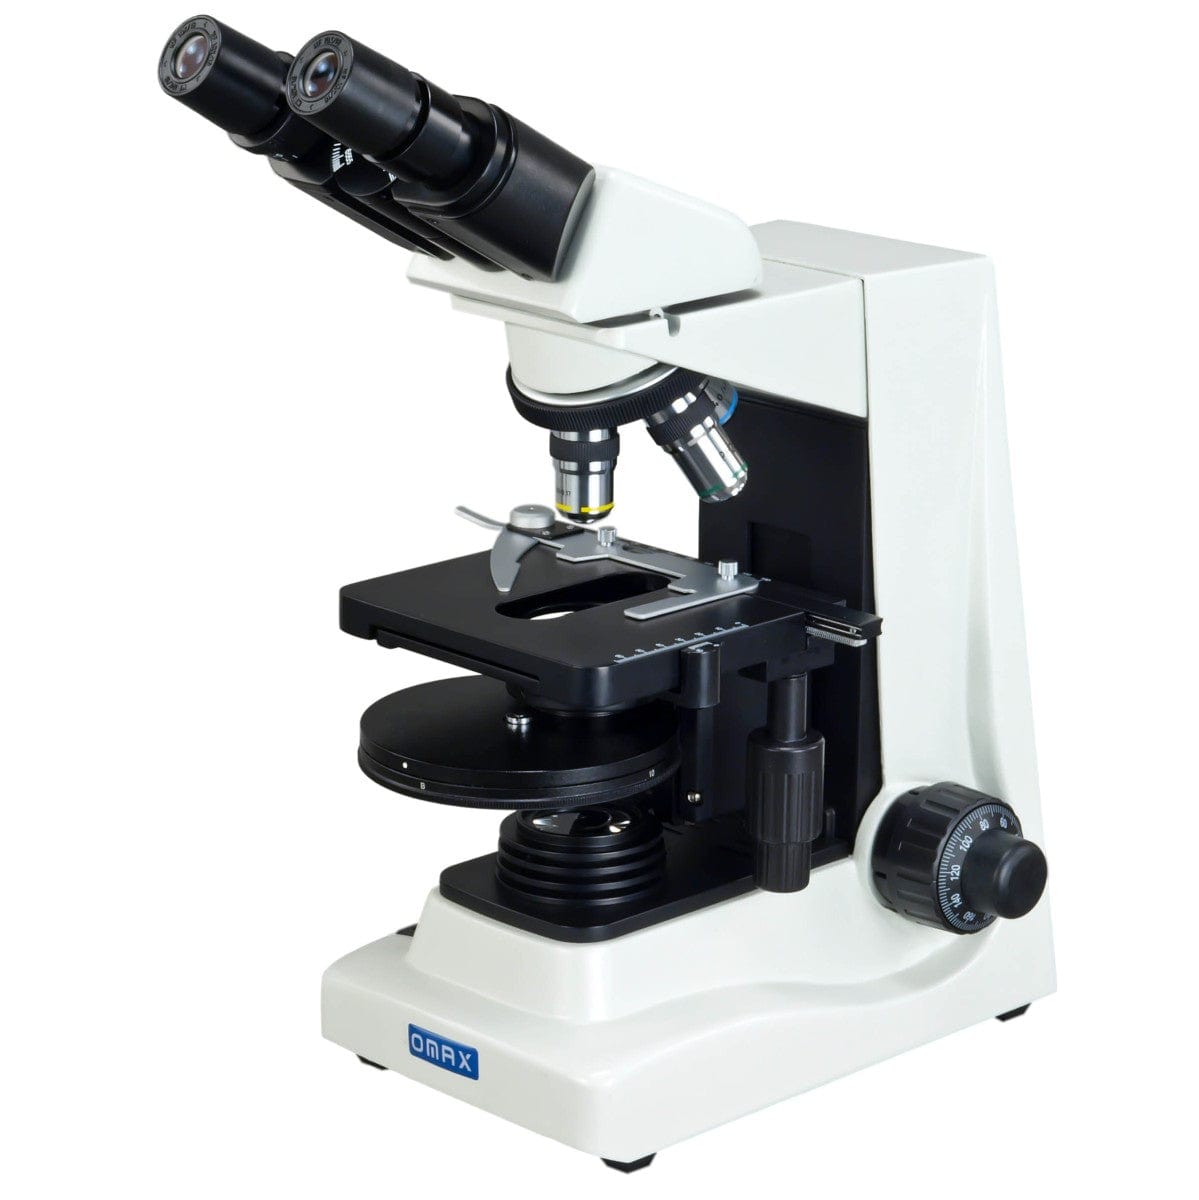 Microscope Perfex Sciences Binoculaire 1000x